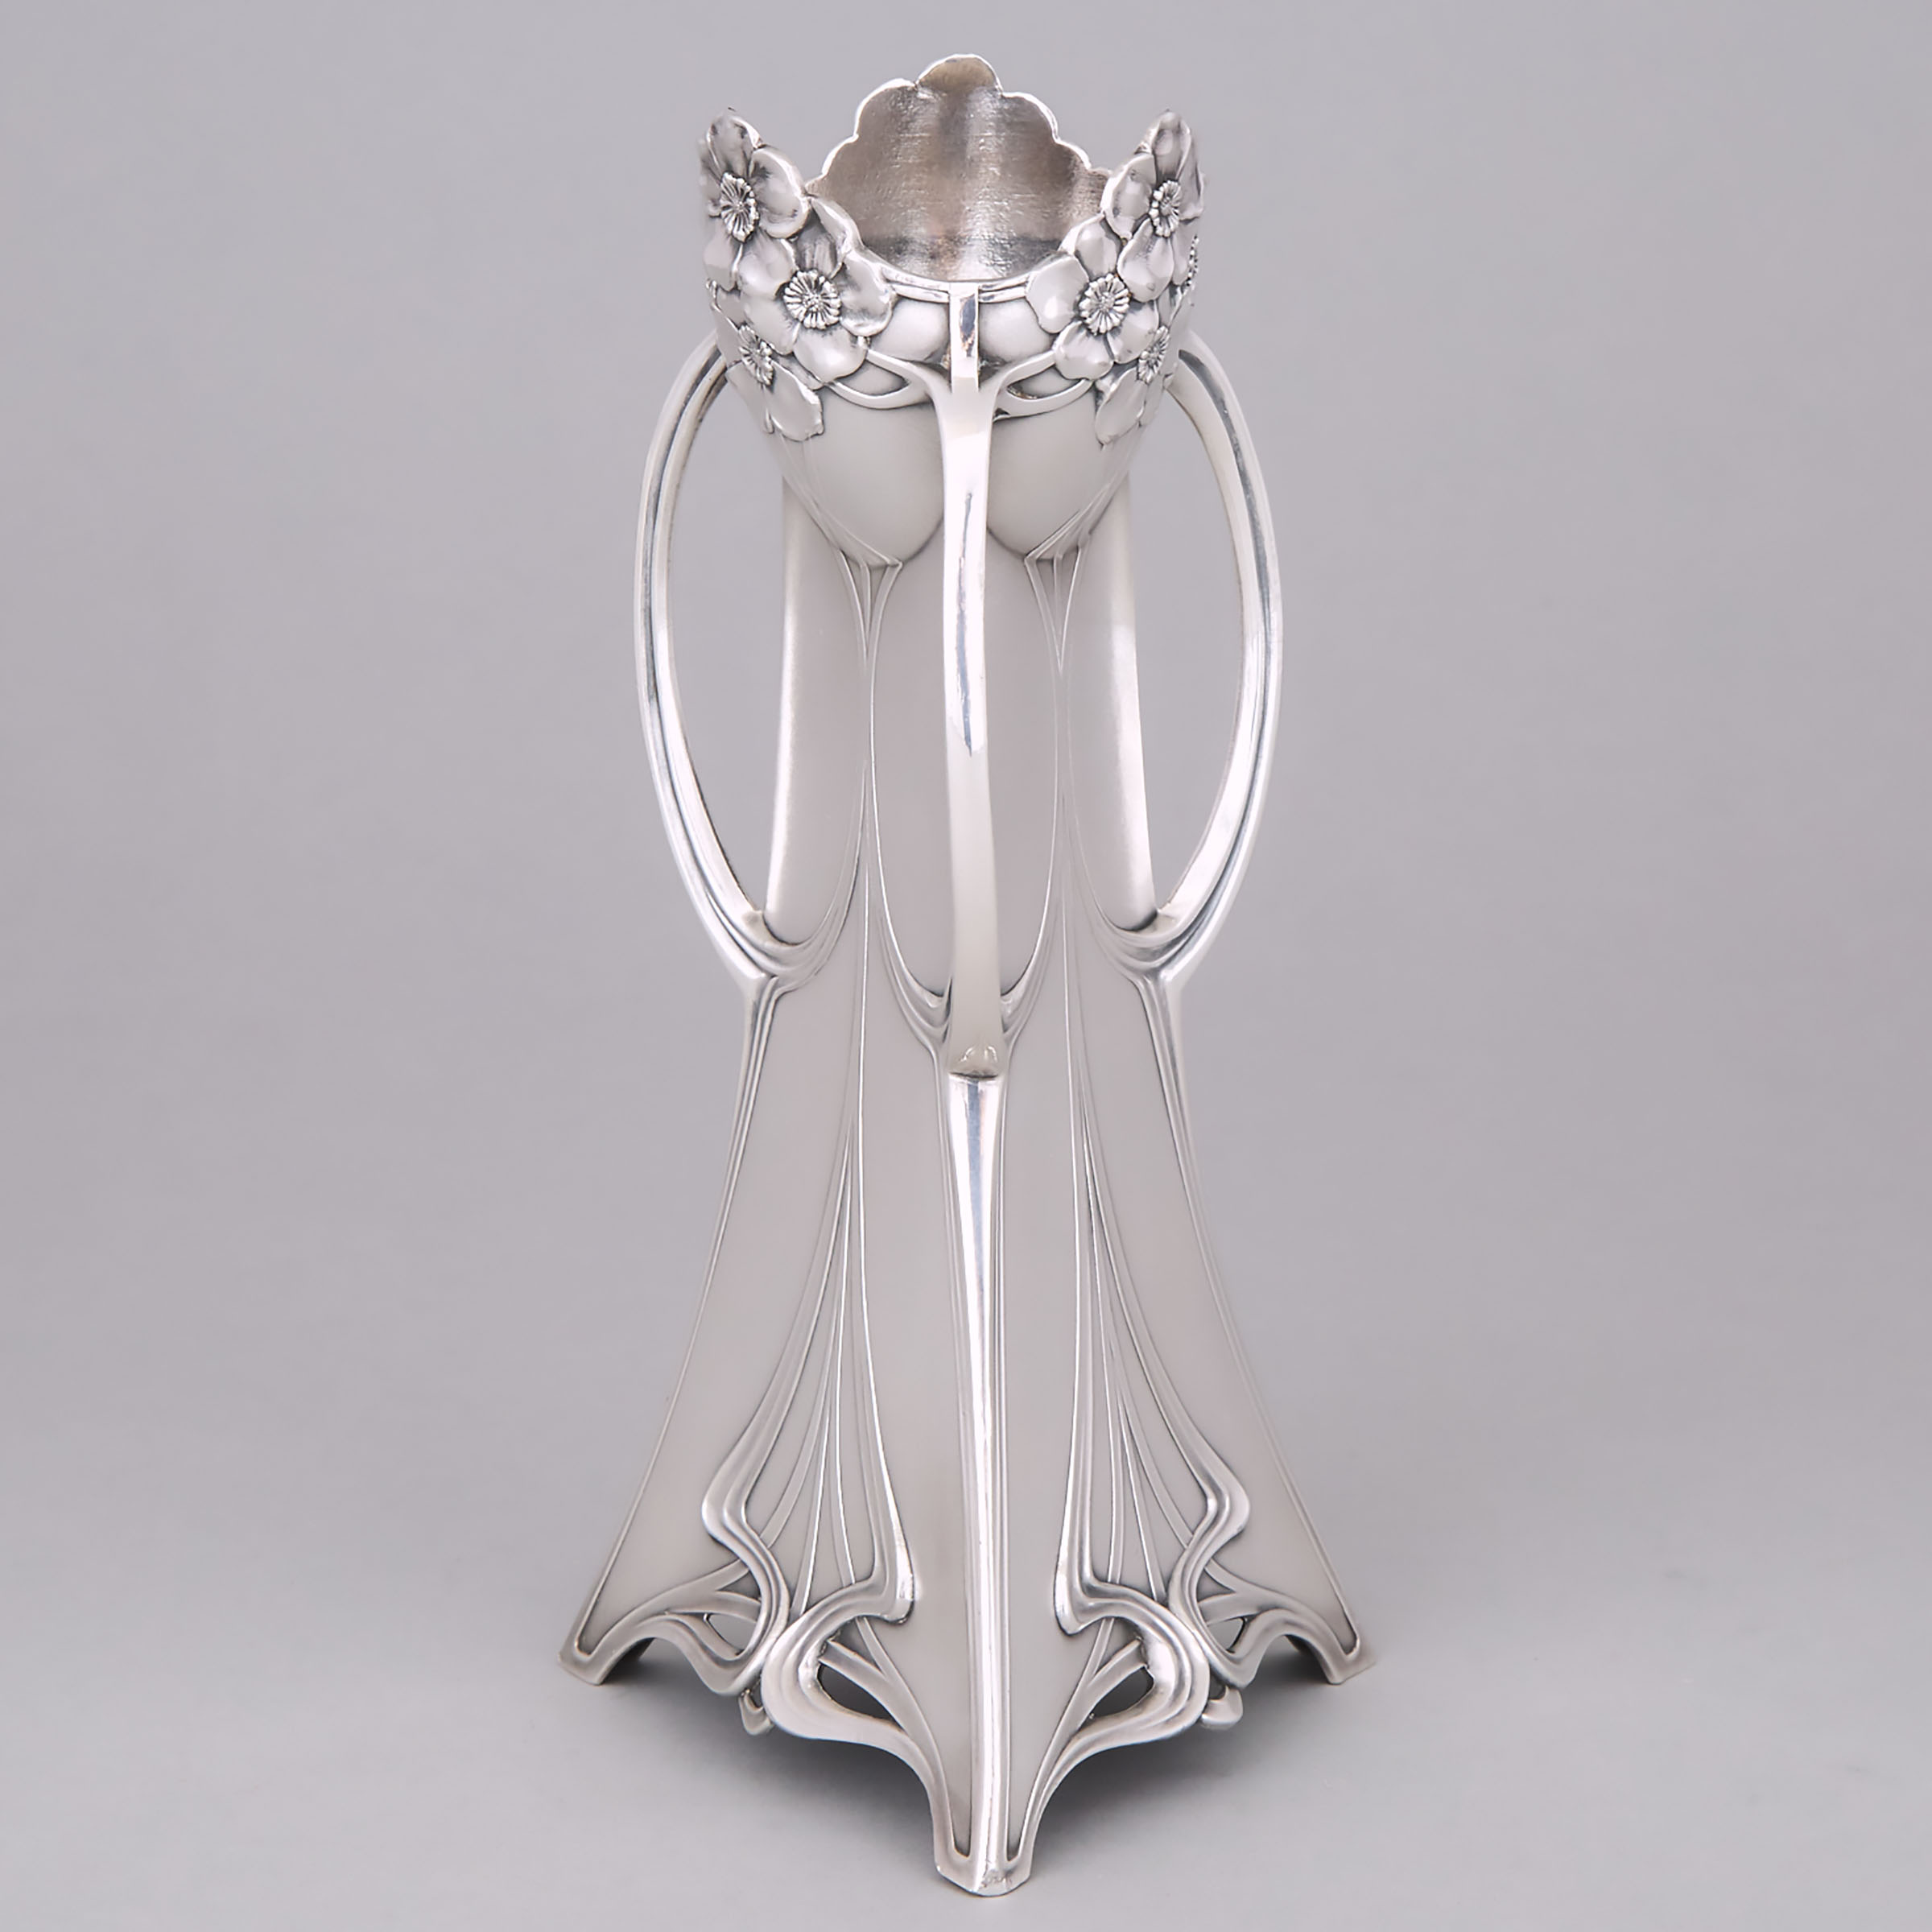 German Art Nouveau Silver Plated Vase, Württembergische Metallwarenfabrik (WMF), early 20th century